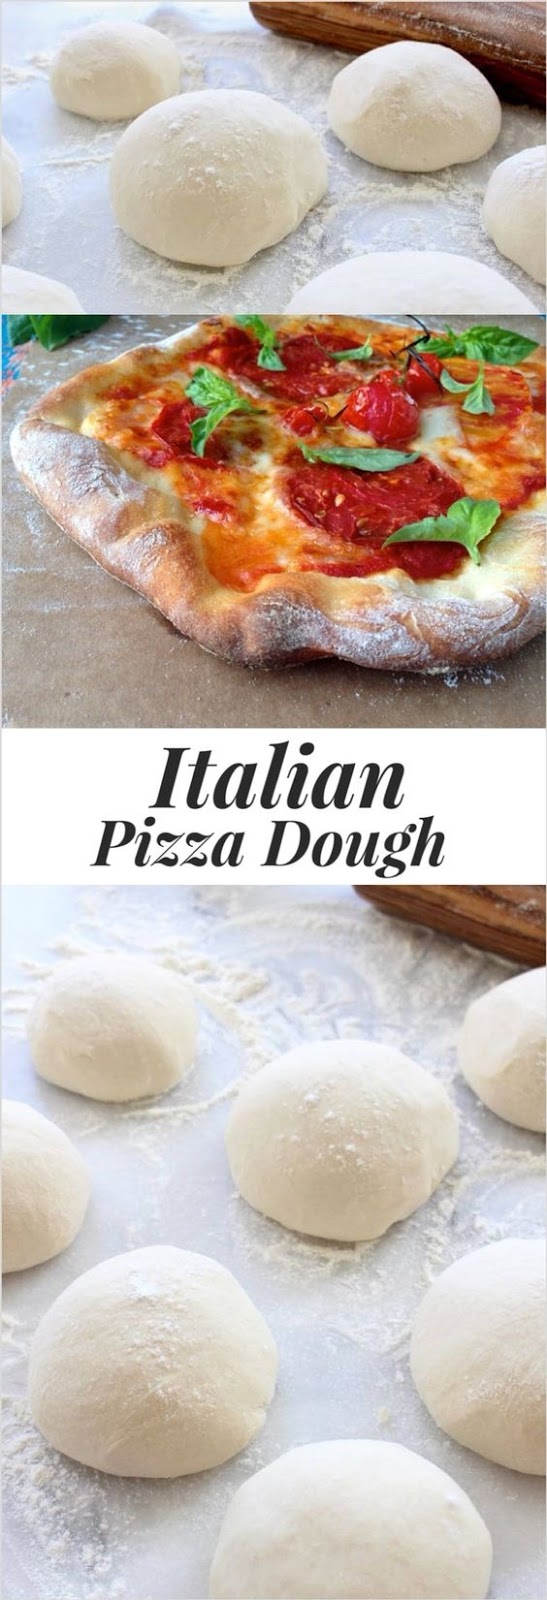 Rustic Italian Pizza Dough Recipe